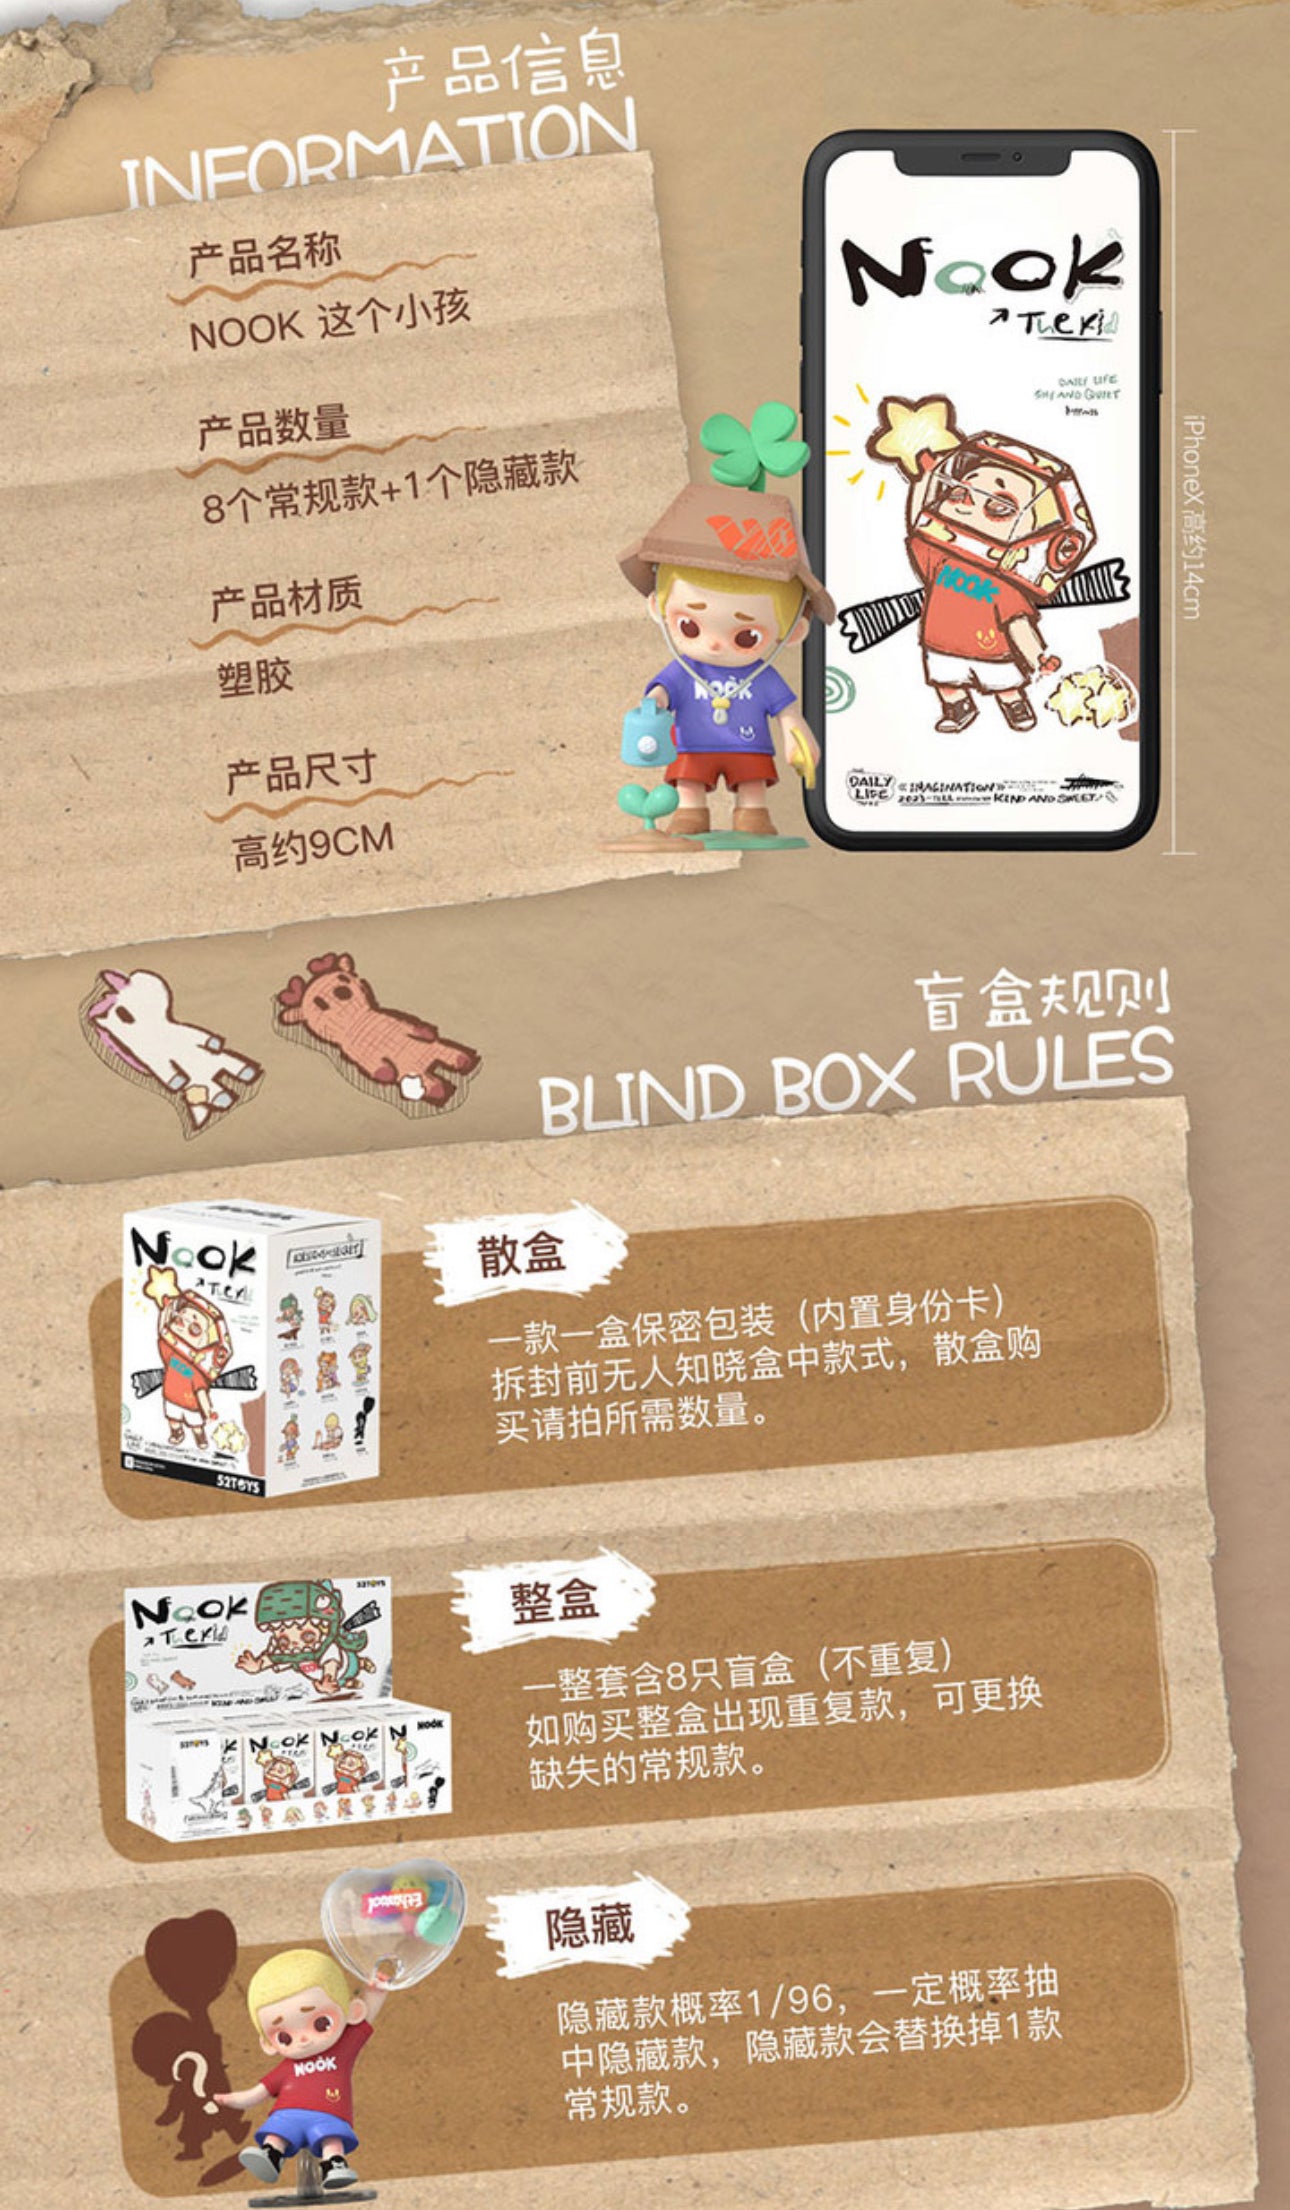 NOOK - The Kid Blind Box Series